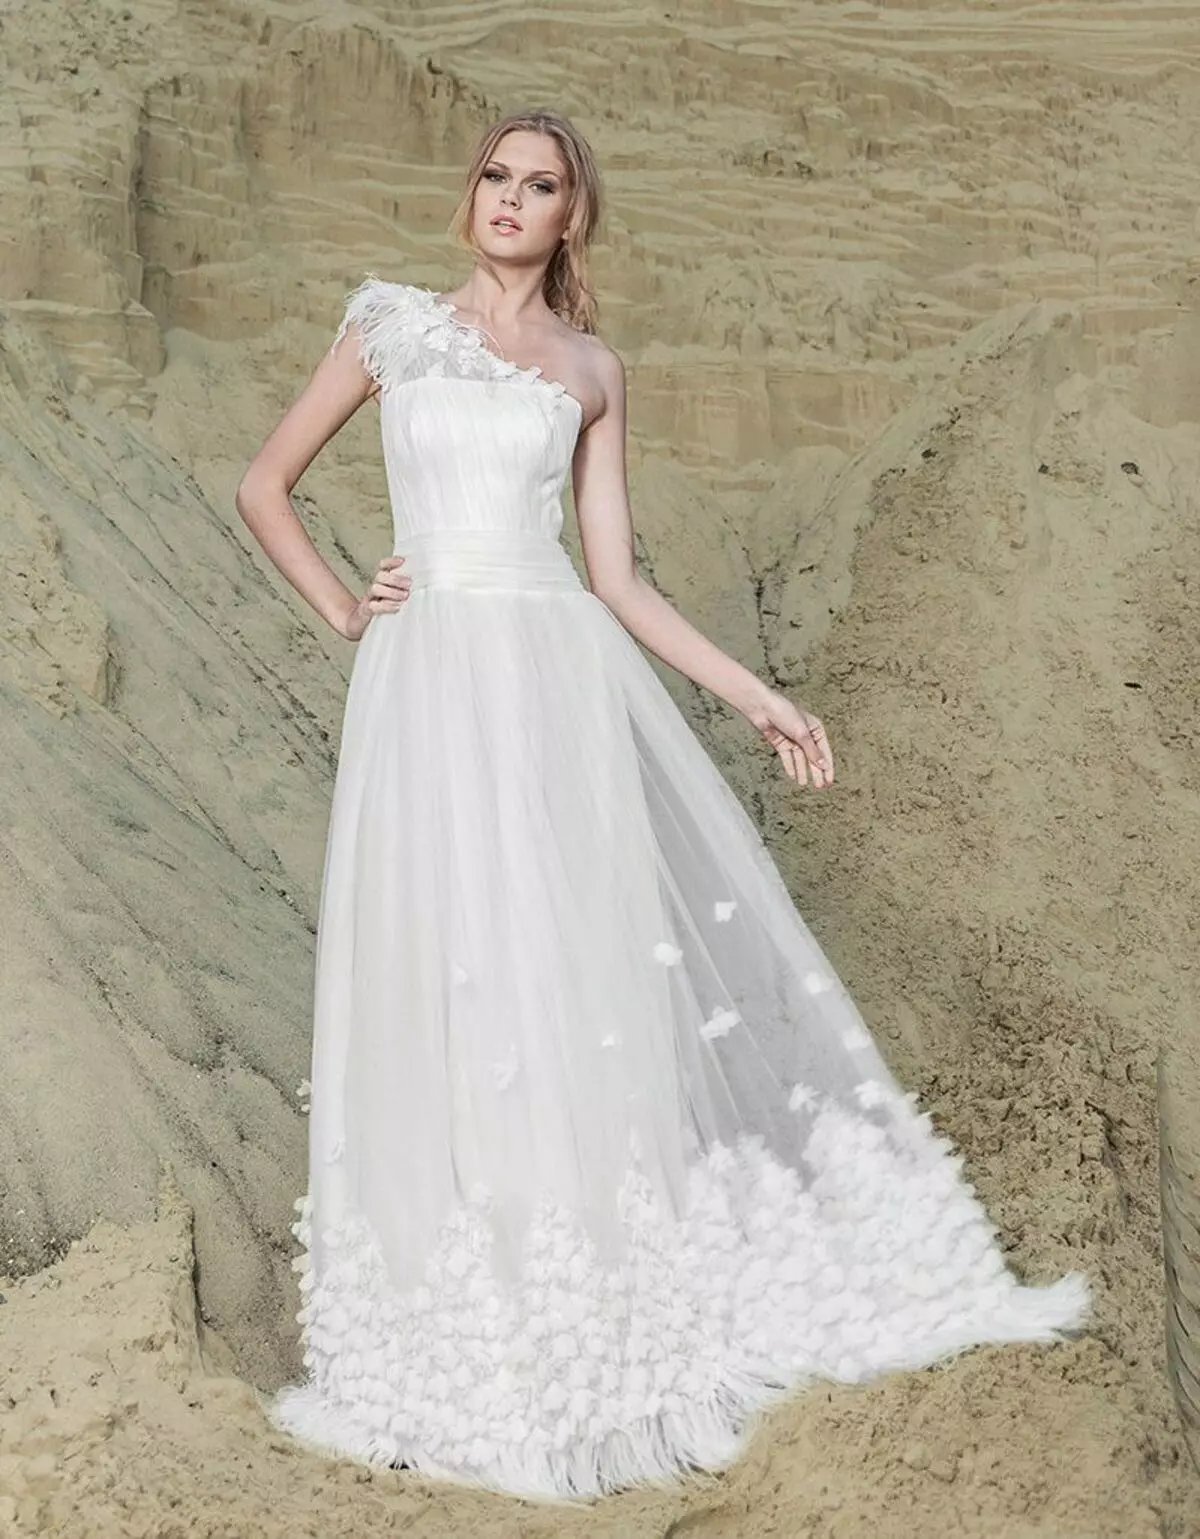 bir çiyin 2014 Collection Anne-Mariee olan Wedding dress